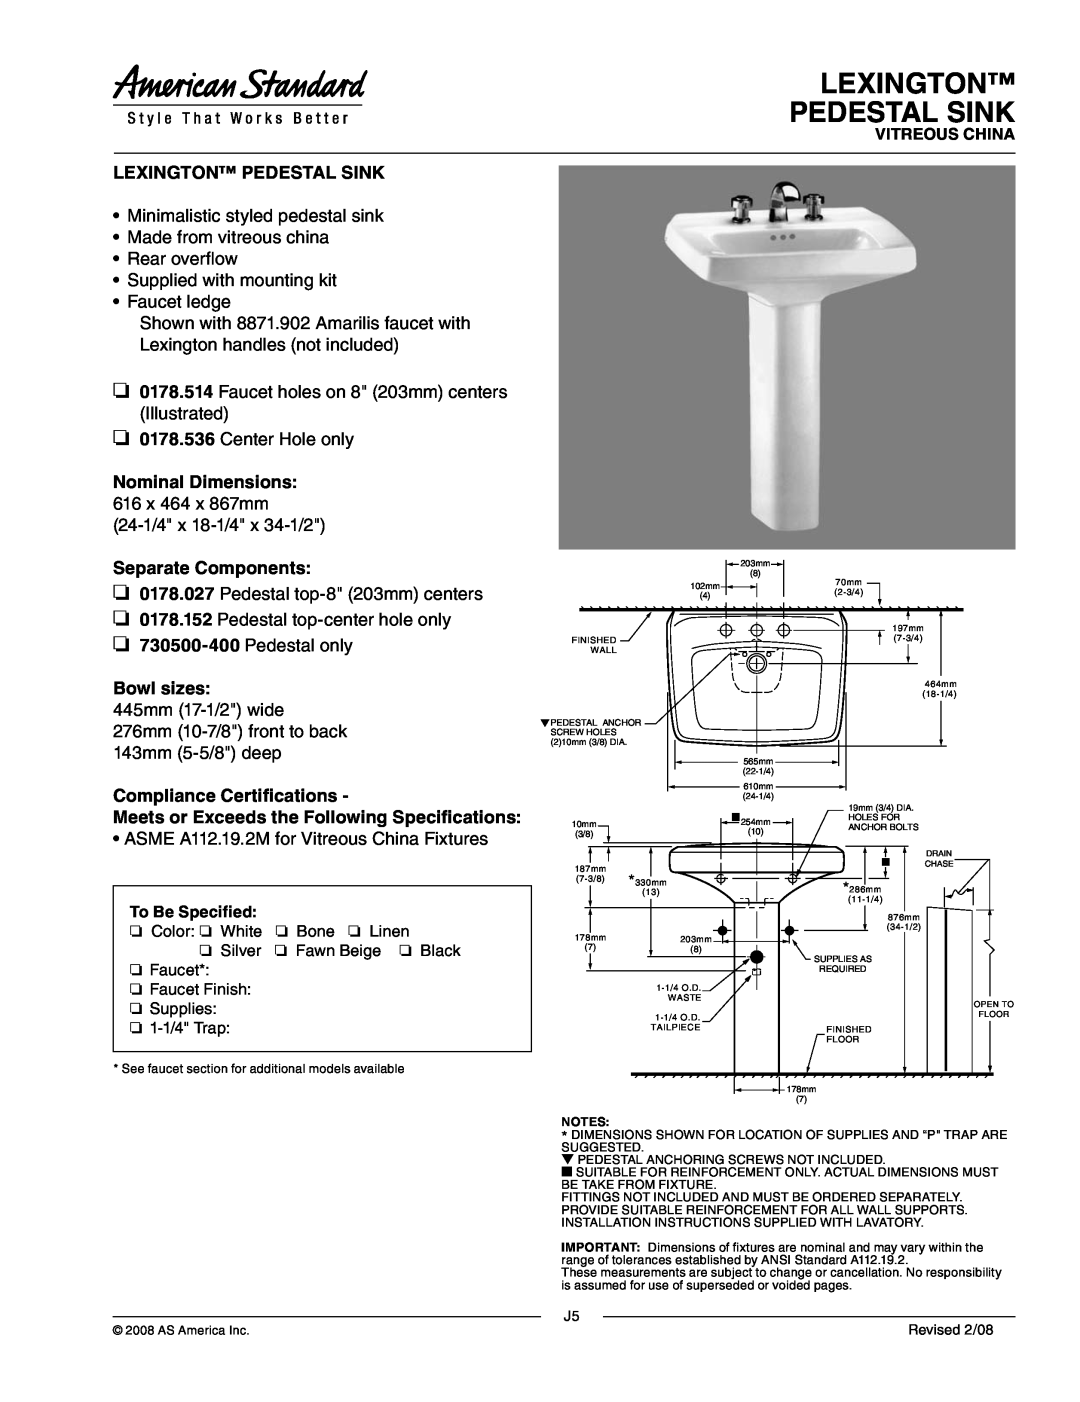 American Standard 0178.536 dimensions Lexington Pedestal Sink, Nominal Dimensions 616 x 464 x 867mm, Separate Components 